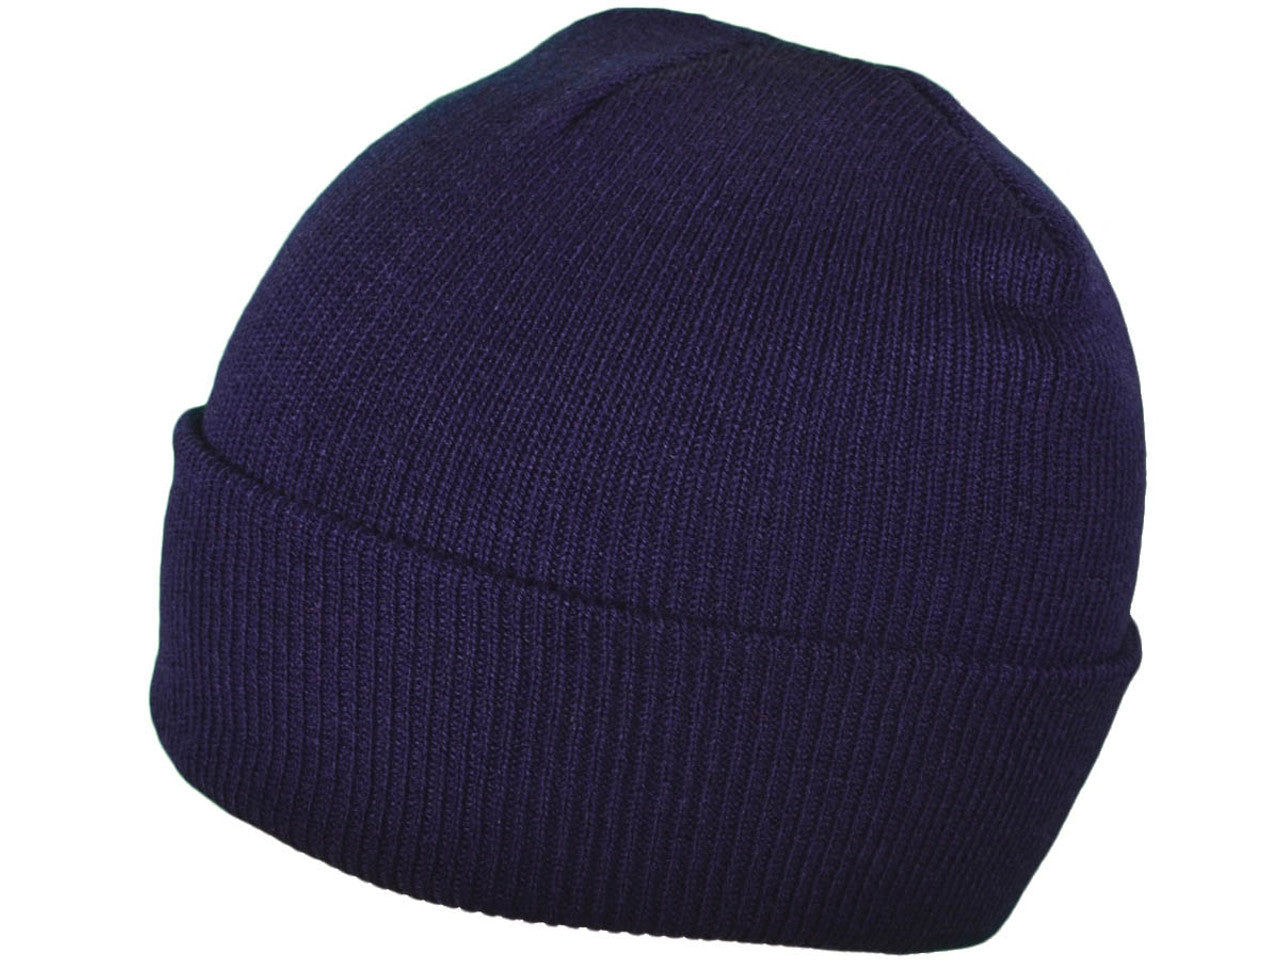 Blank Beanies - Winter Plain Knit Hat Skull Toboggan Stocking Caps  **SNUG FIT**  - 19827  SKU#BWBNIE19827